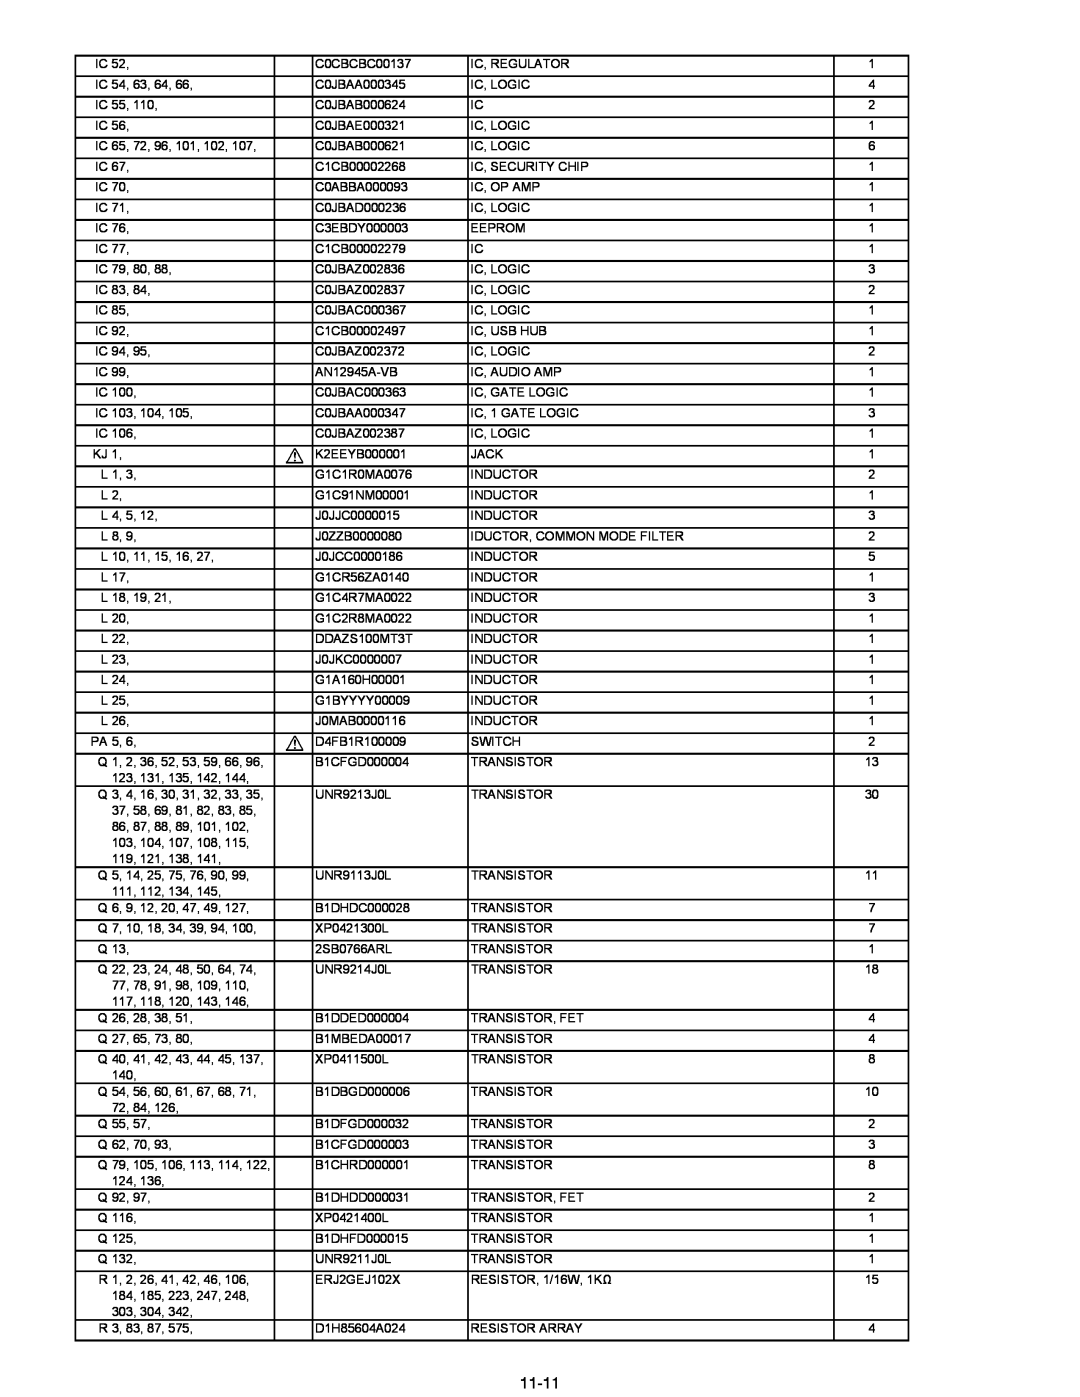 Matsushita CF-30 service manual 11-11, IC 65, 72, 96, 101, 102, Q 1, 2, 36, 52, 53, 59, 66, Q 3, 4, 16, 30, 31, 32, 33 